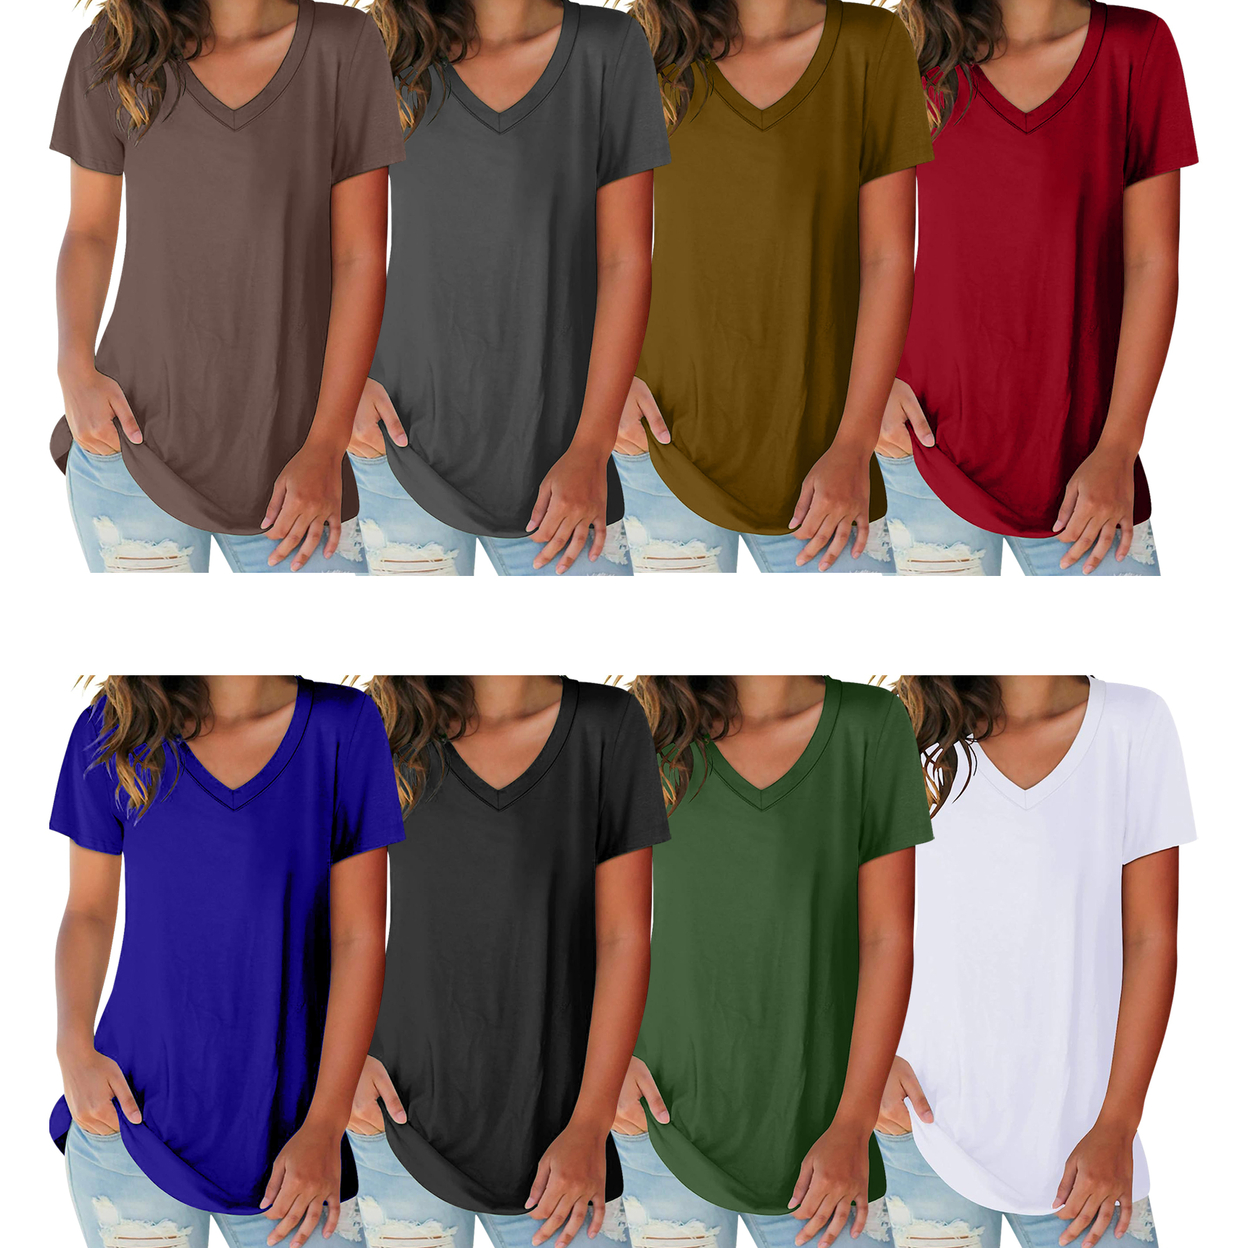 2-Pack: Women's Ultra Soft Smooth Cotton Blend Basic V-Neck Short Sleeve Shirts - Grey & Navy, Small